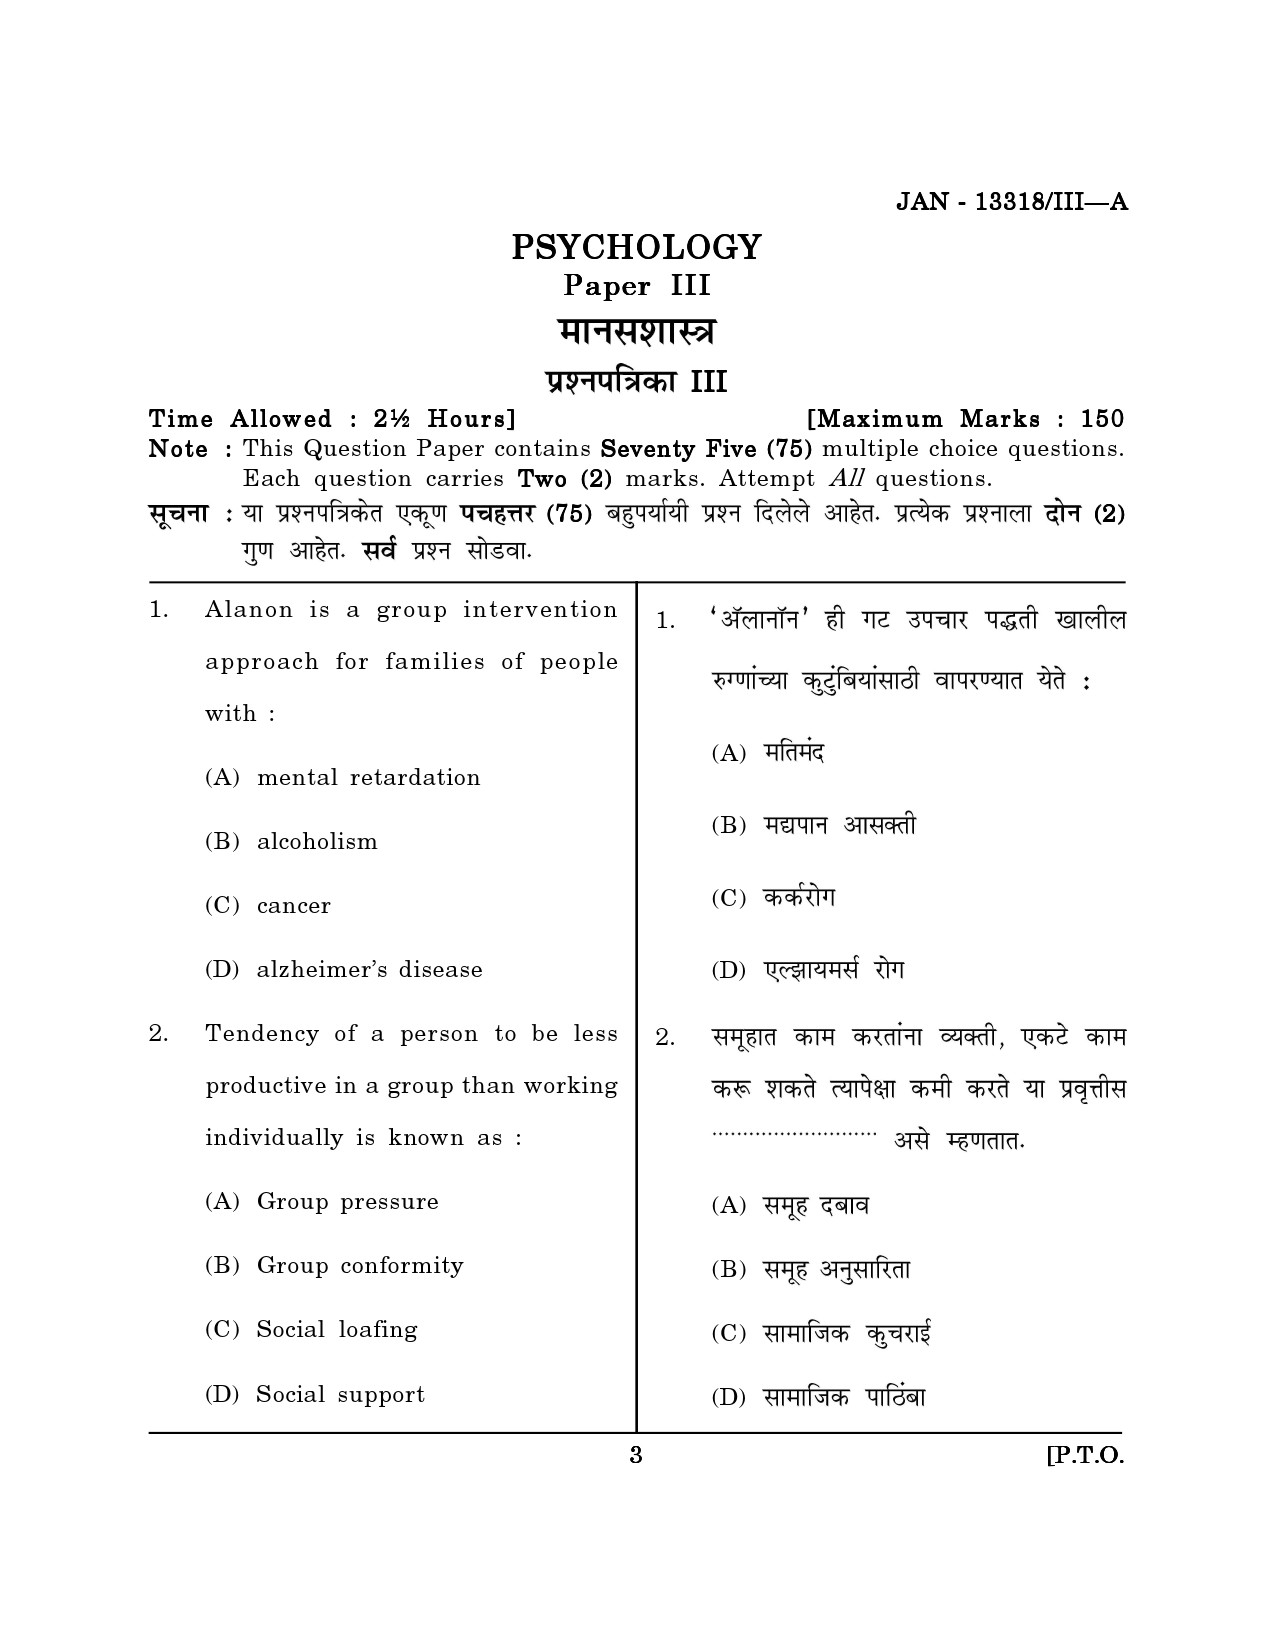 Maharashtra SET Psychology Question Paper III January 2018 2